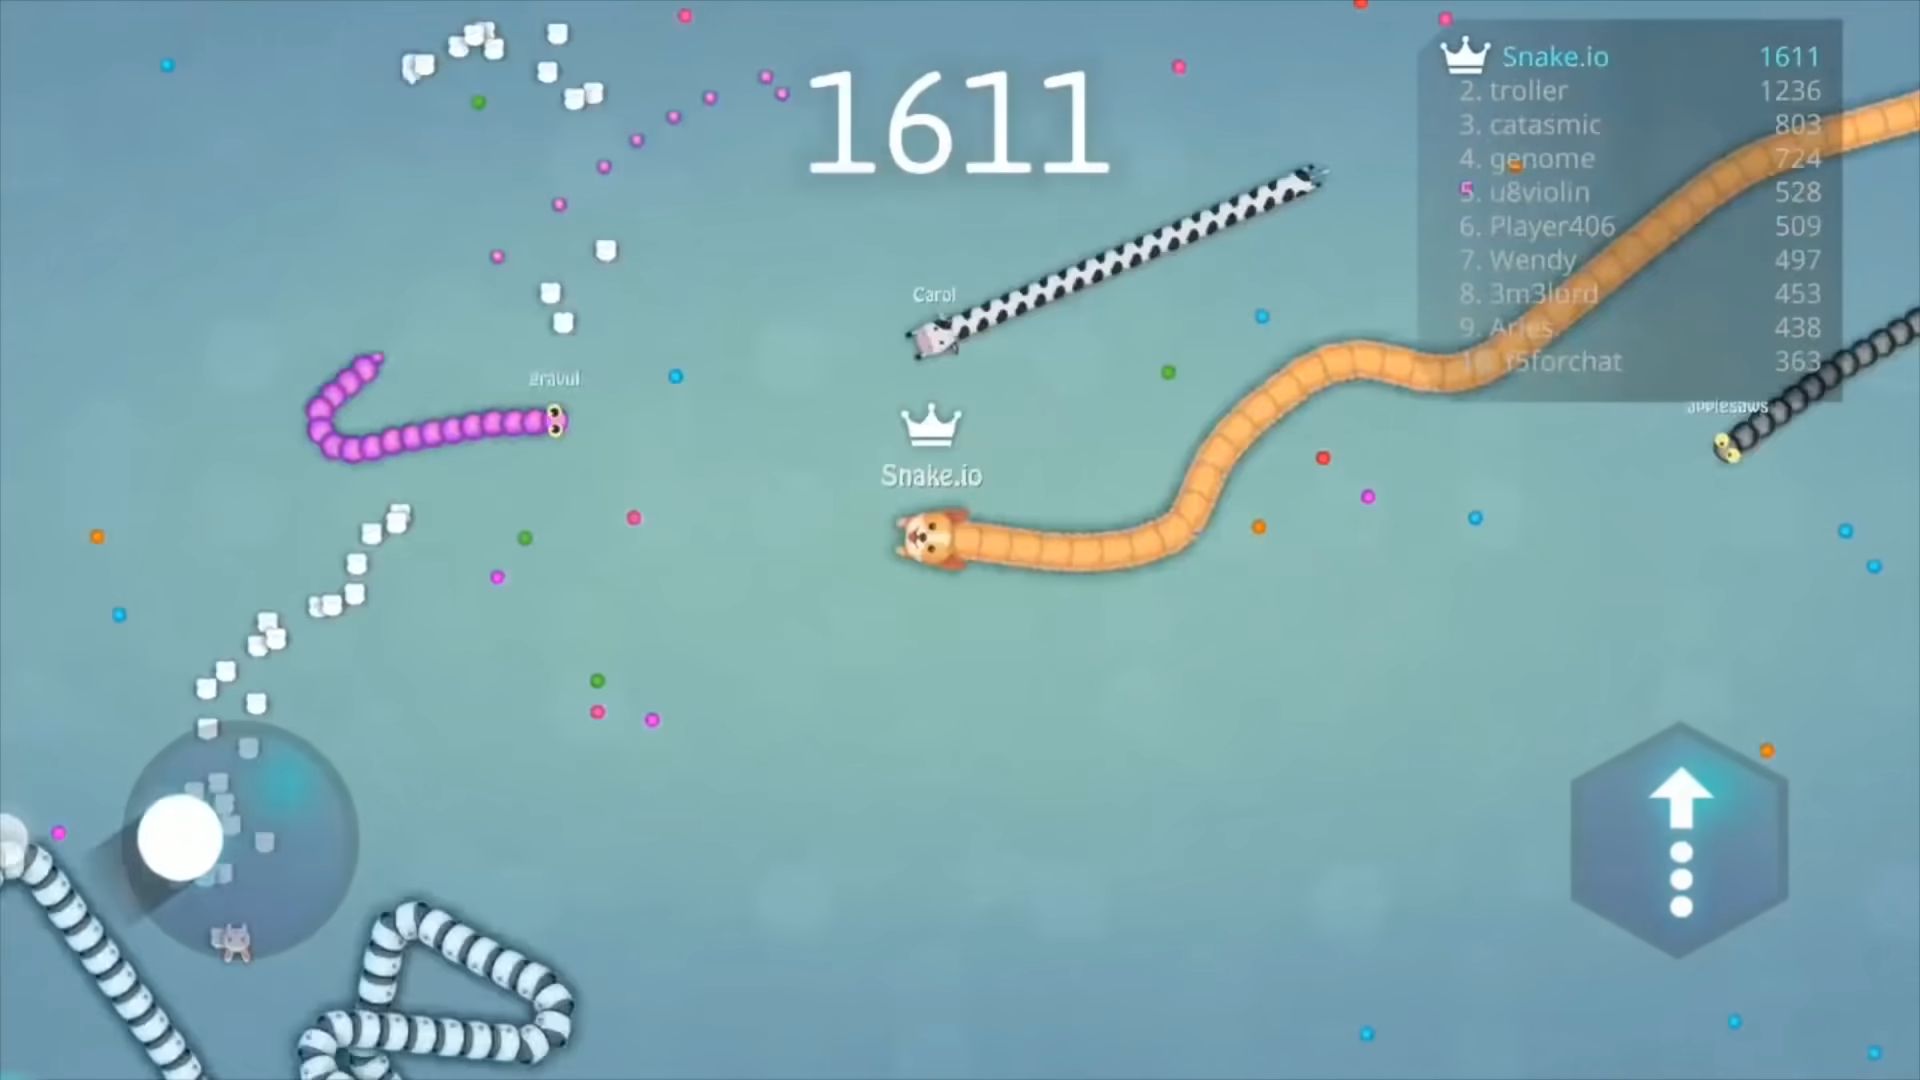 Snake.io - Fun Addicting Arcade Battle .io Games for Android